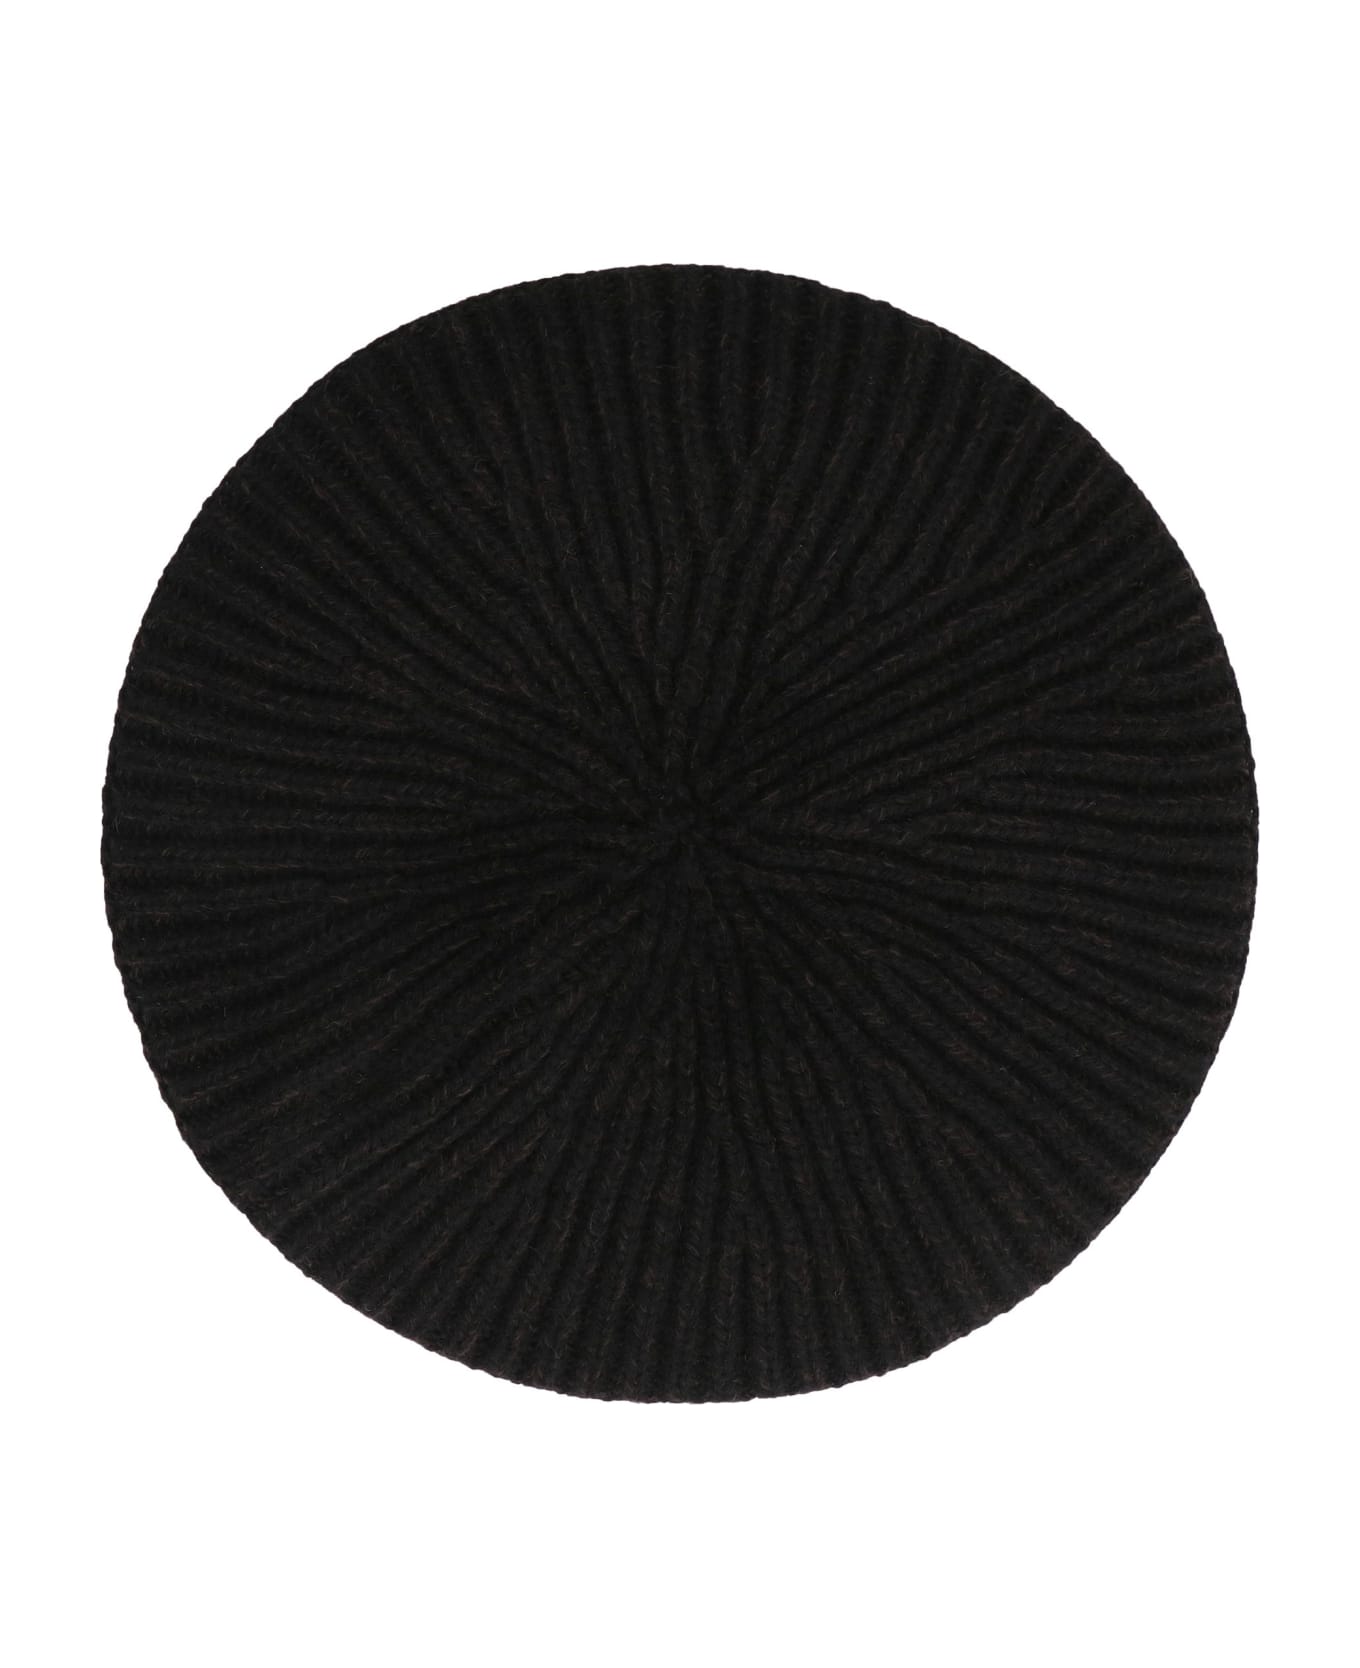 Ganni Knitted Wool Beanie Hat - black